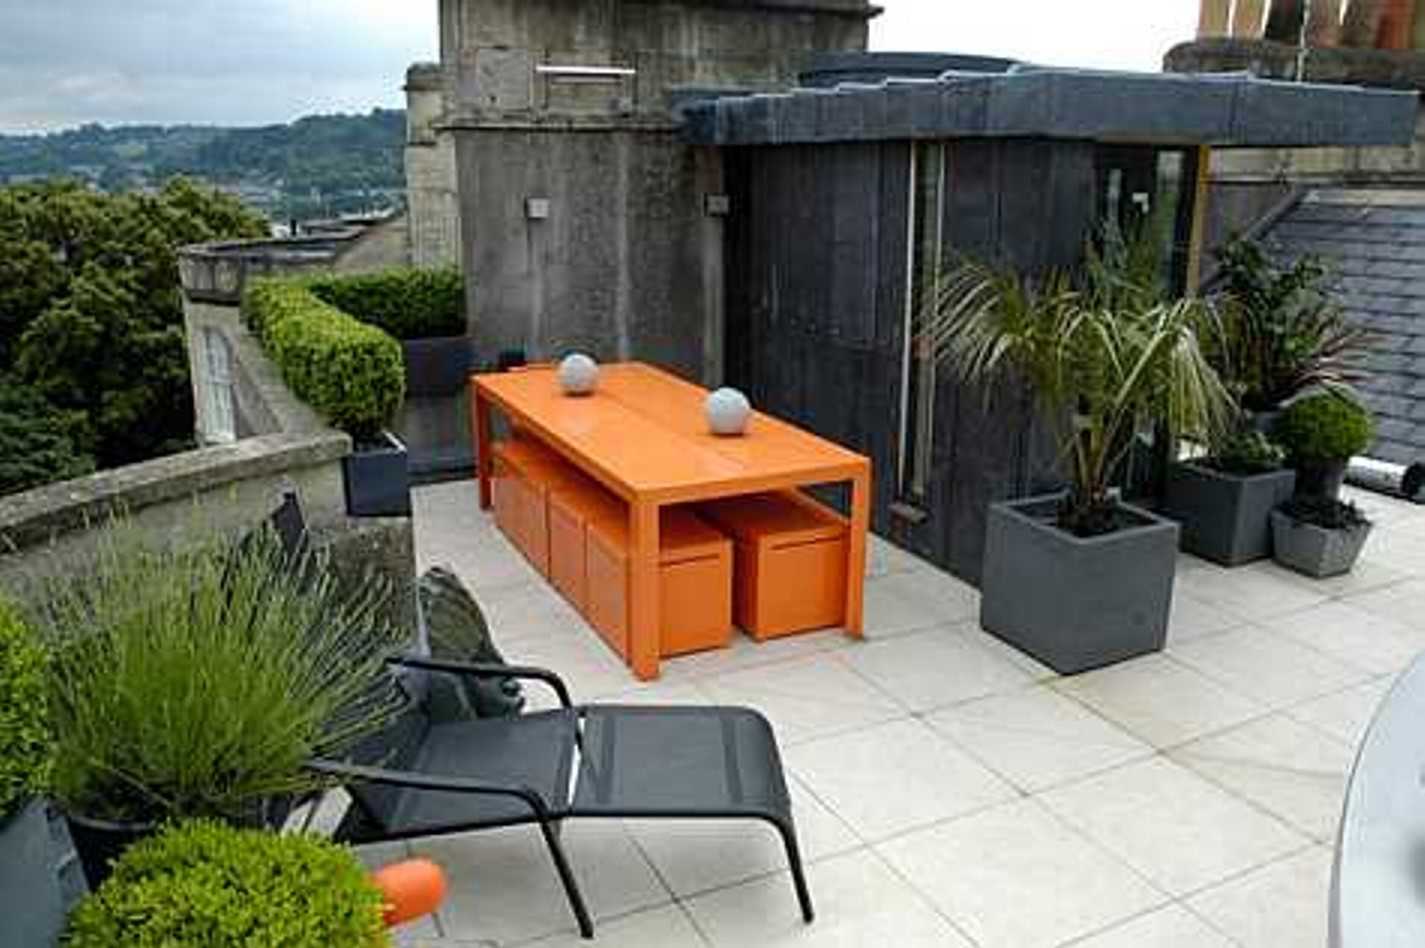 roof terrace garden design ideas photo - 8